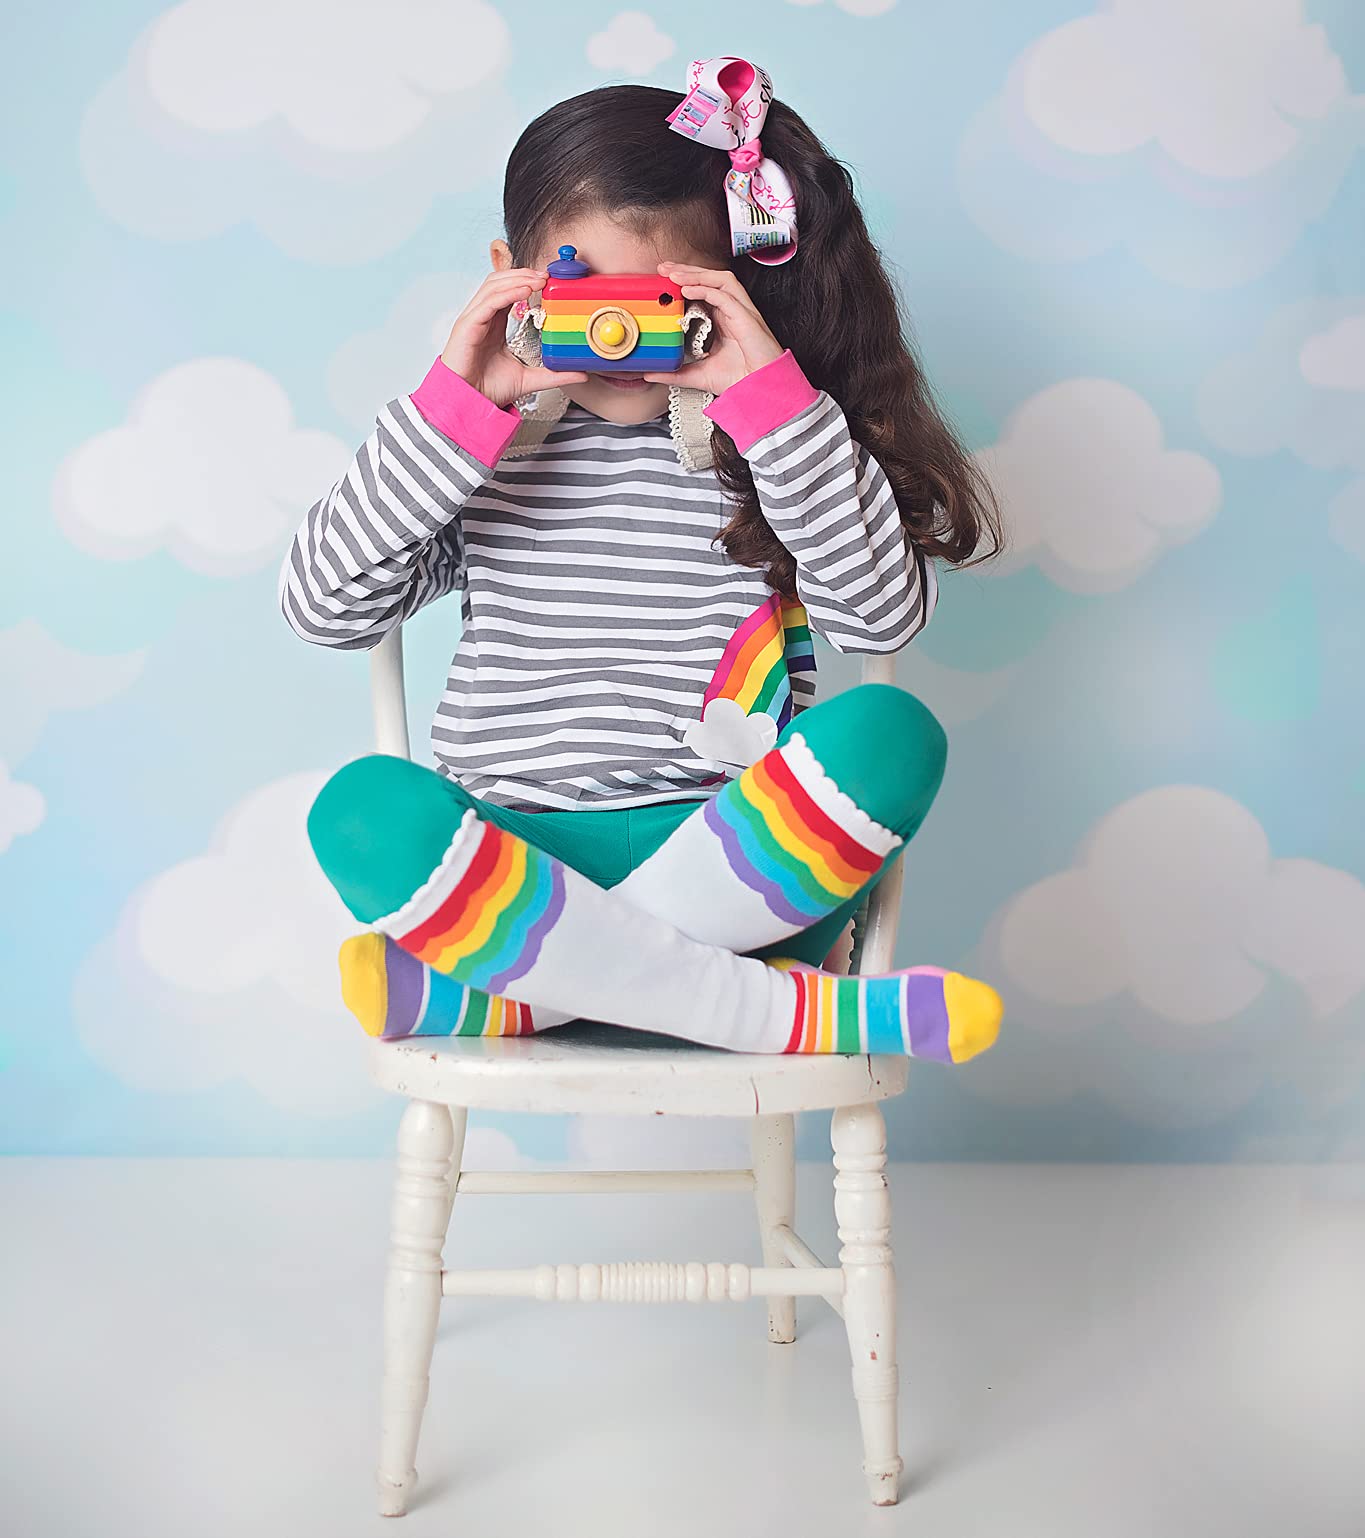 Jefferies Socks Girls' Little Colorful Rainbow Knee High Socks 3 Pair Pack